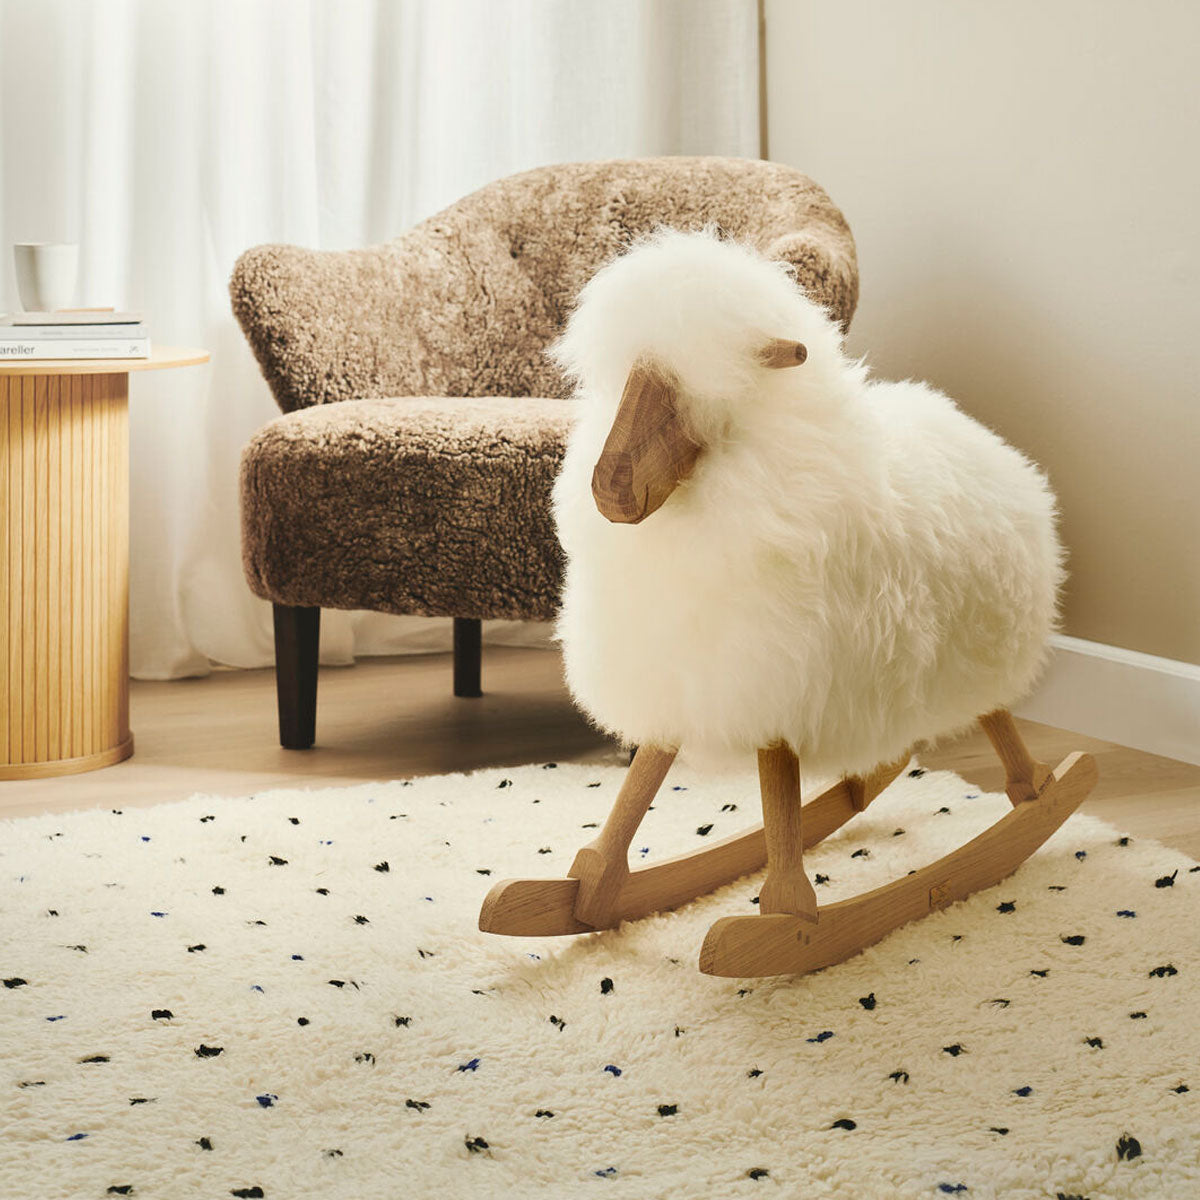 The Rocking Sheep │ Povl Kjer Design │ Made in Denmark │ Natural Brown Long Wool │ Large